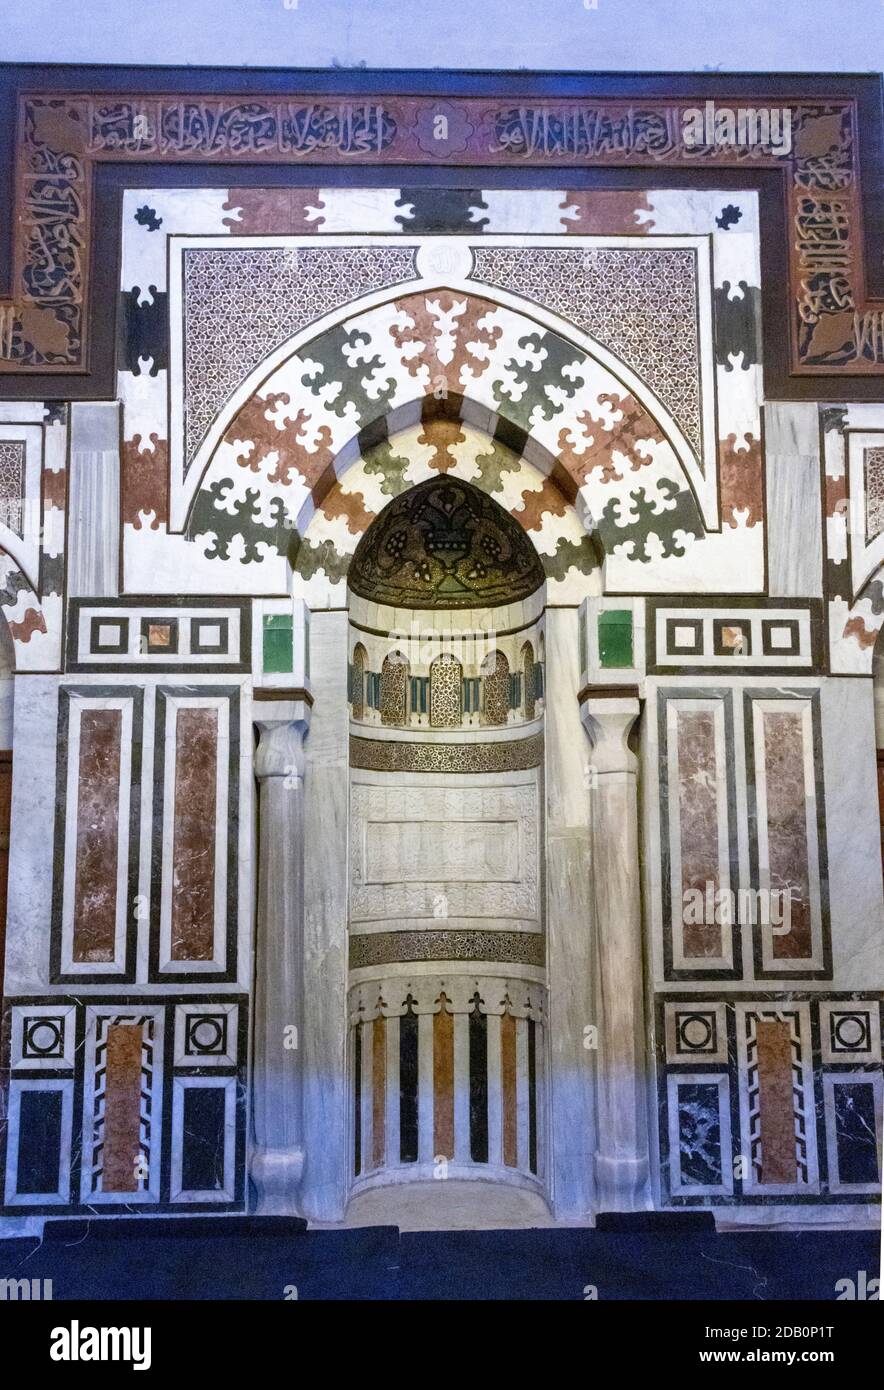 Egypt, Cairo, Madrasa, mihrab of mausoleum of Amir Aqbugha Stock Photo